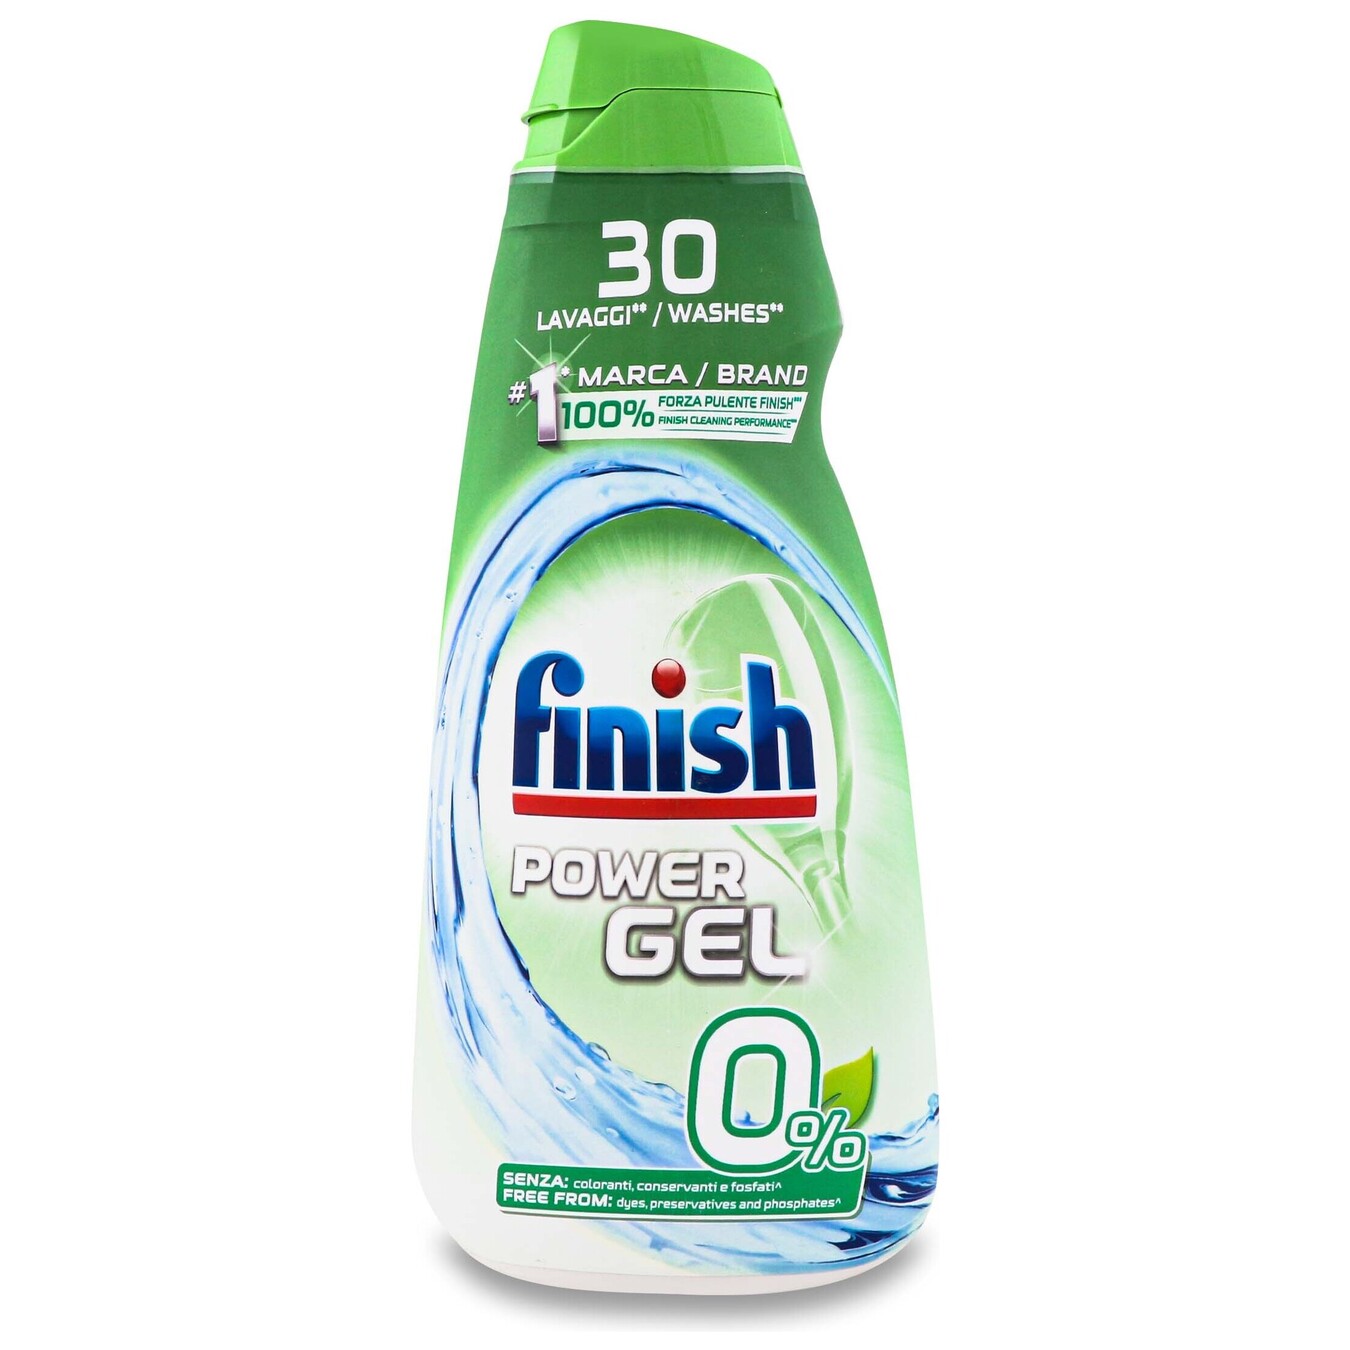 Dishwashing detergent Finish Power All in 1 Gel in dishwashers0% 600ml